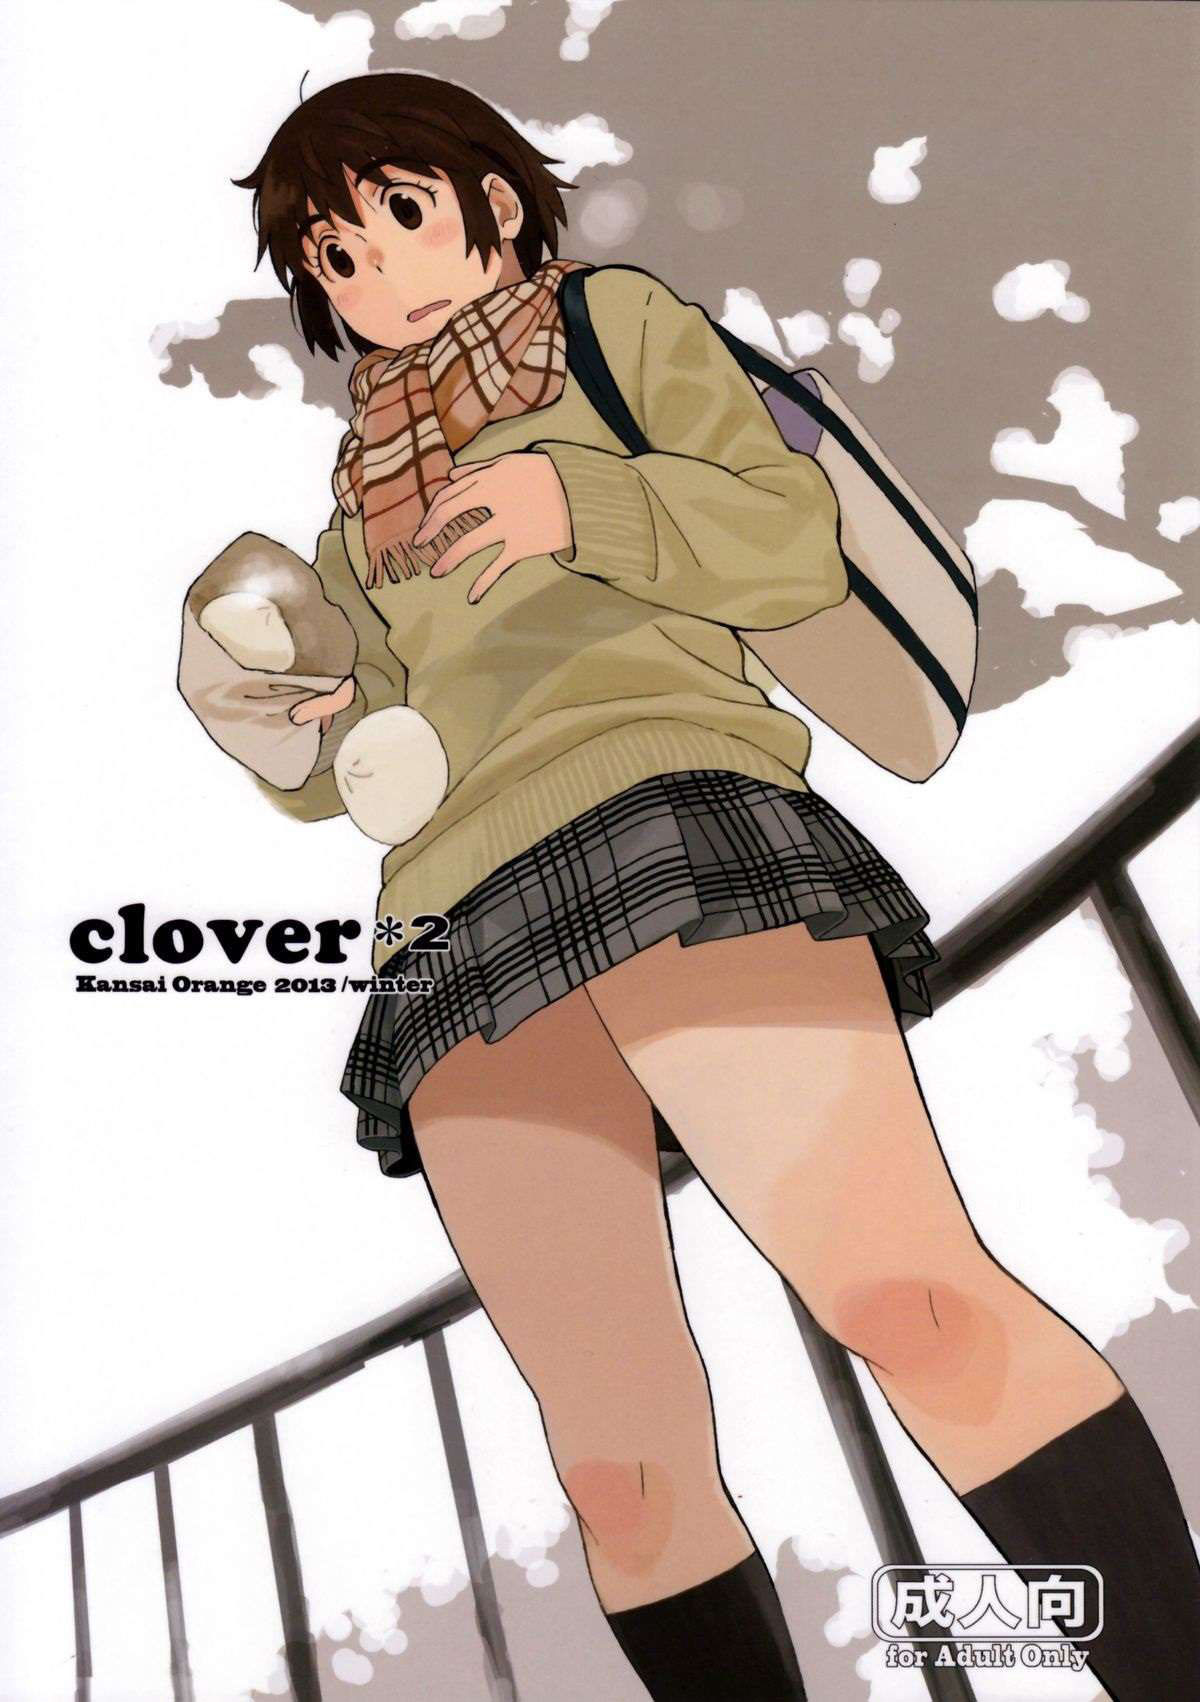 Clover * 2 - Foto 1